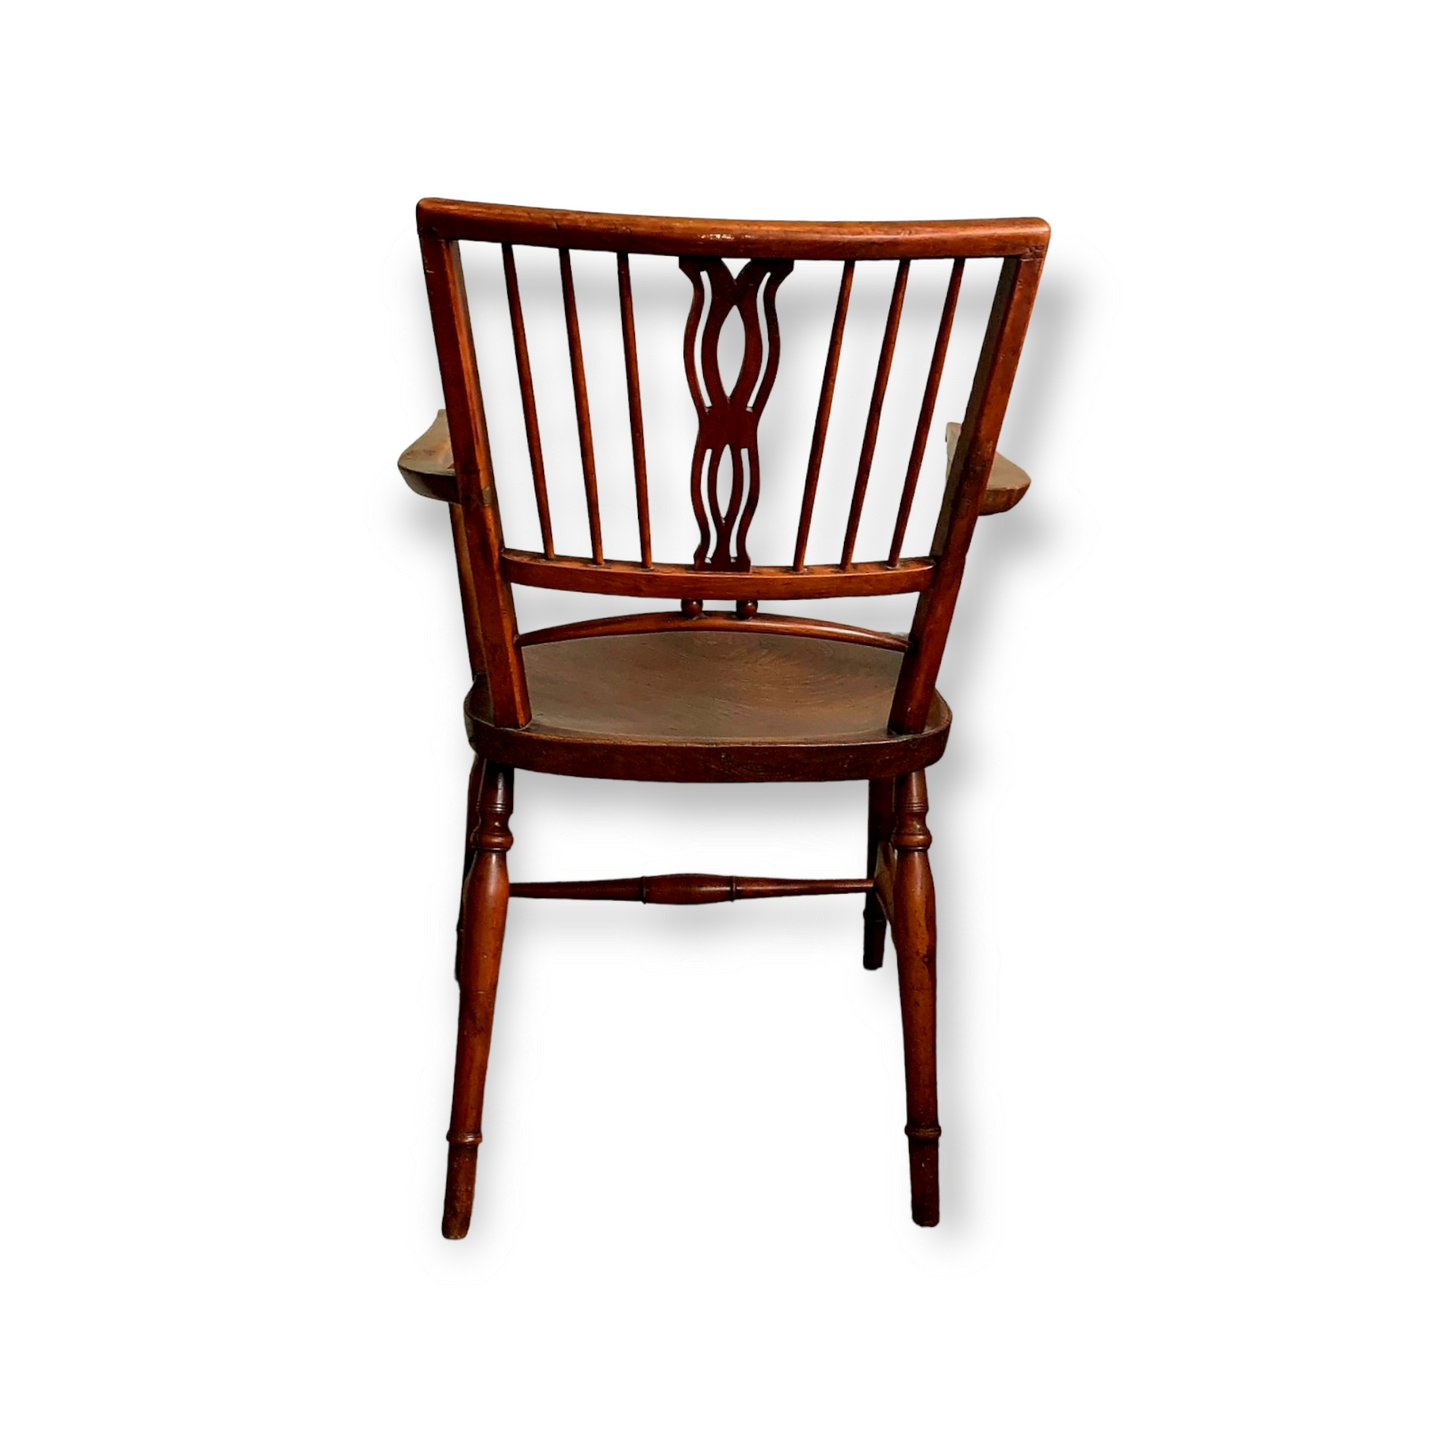 George III Period English Antique Yew Wood Mendlesham Chair / Armchair, circa 1800